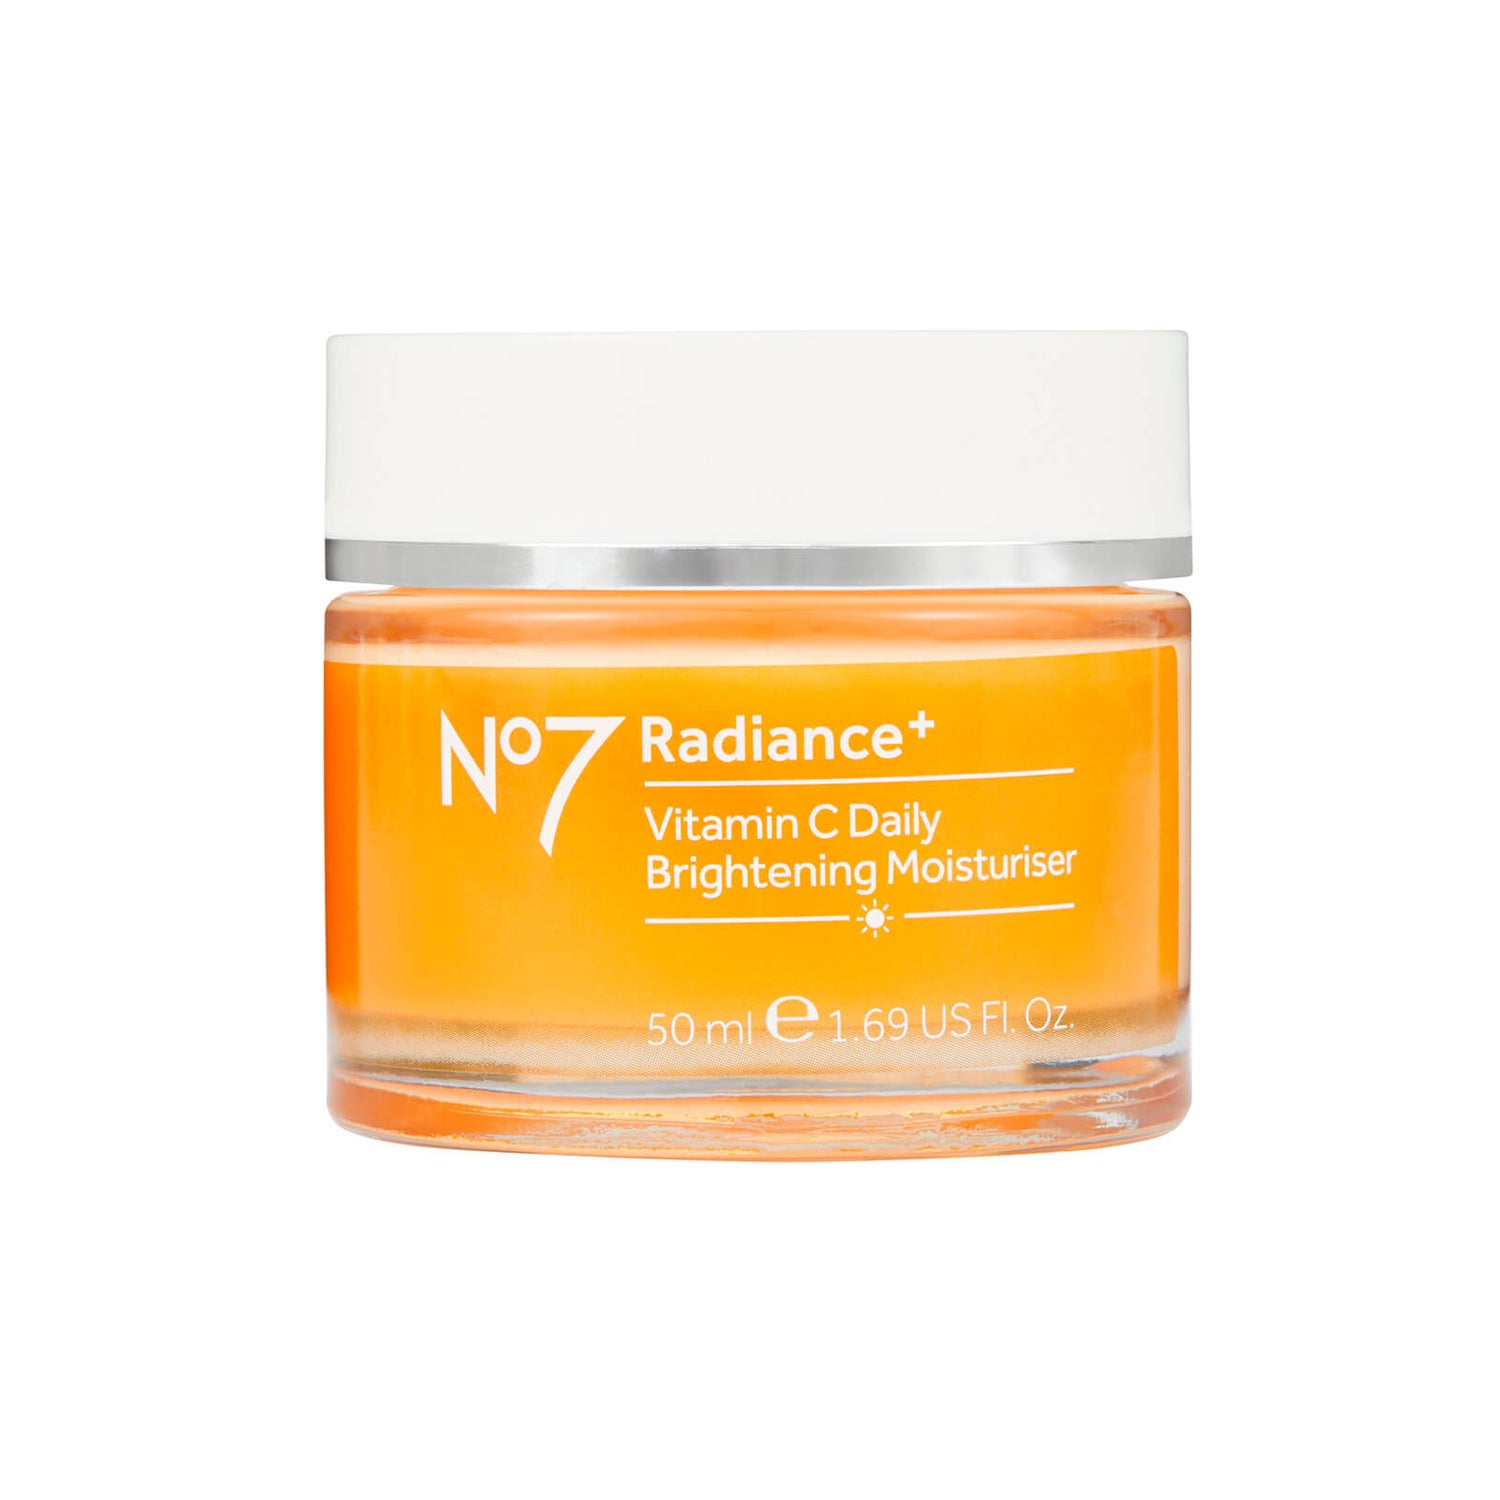 Radiance+ Vitamin C Daily Brightening Moisturiser, anti-ageing, hyaluronic acid, skin strengthening